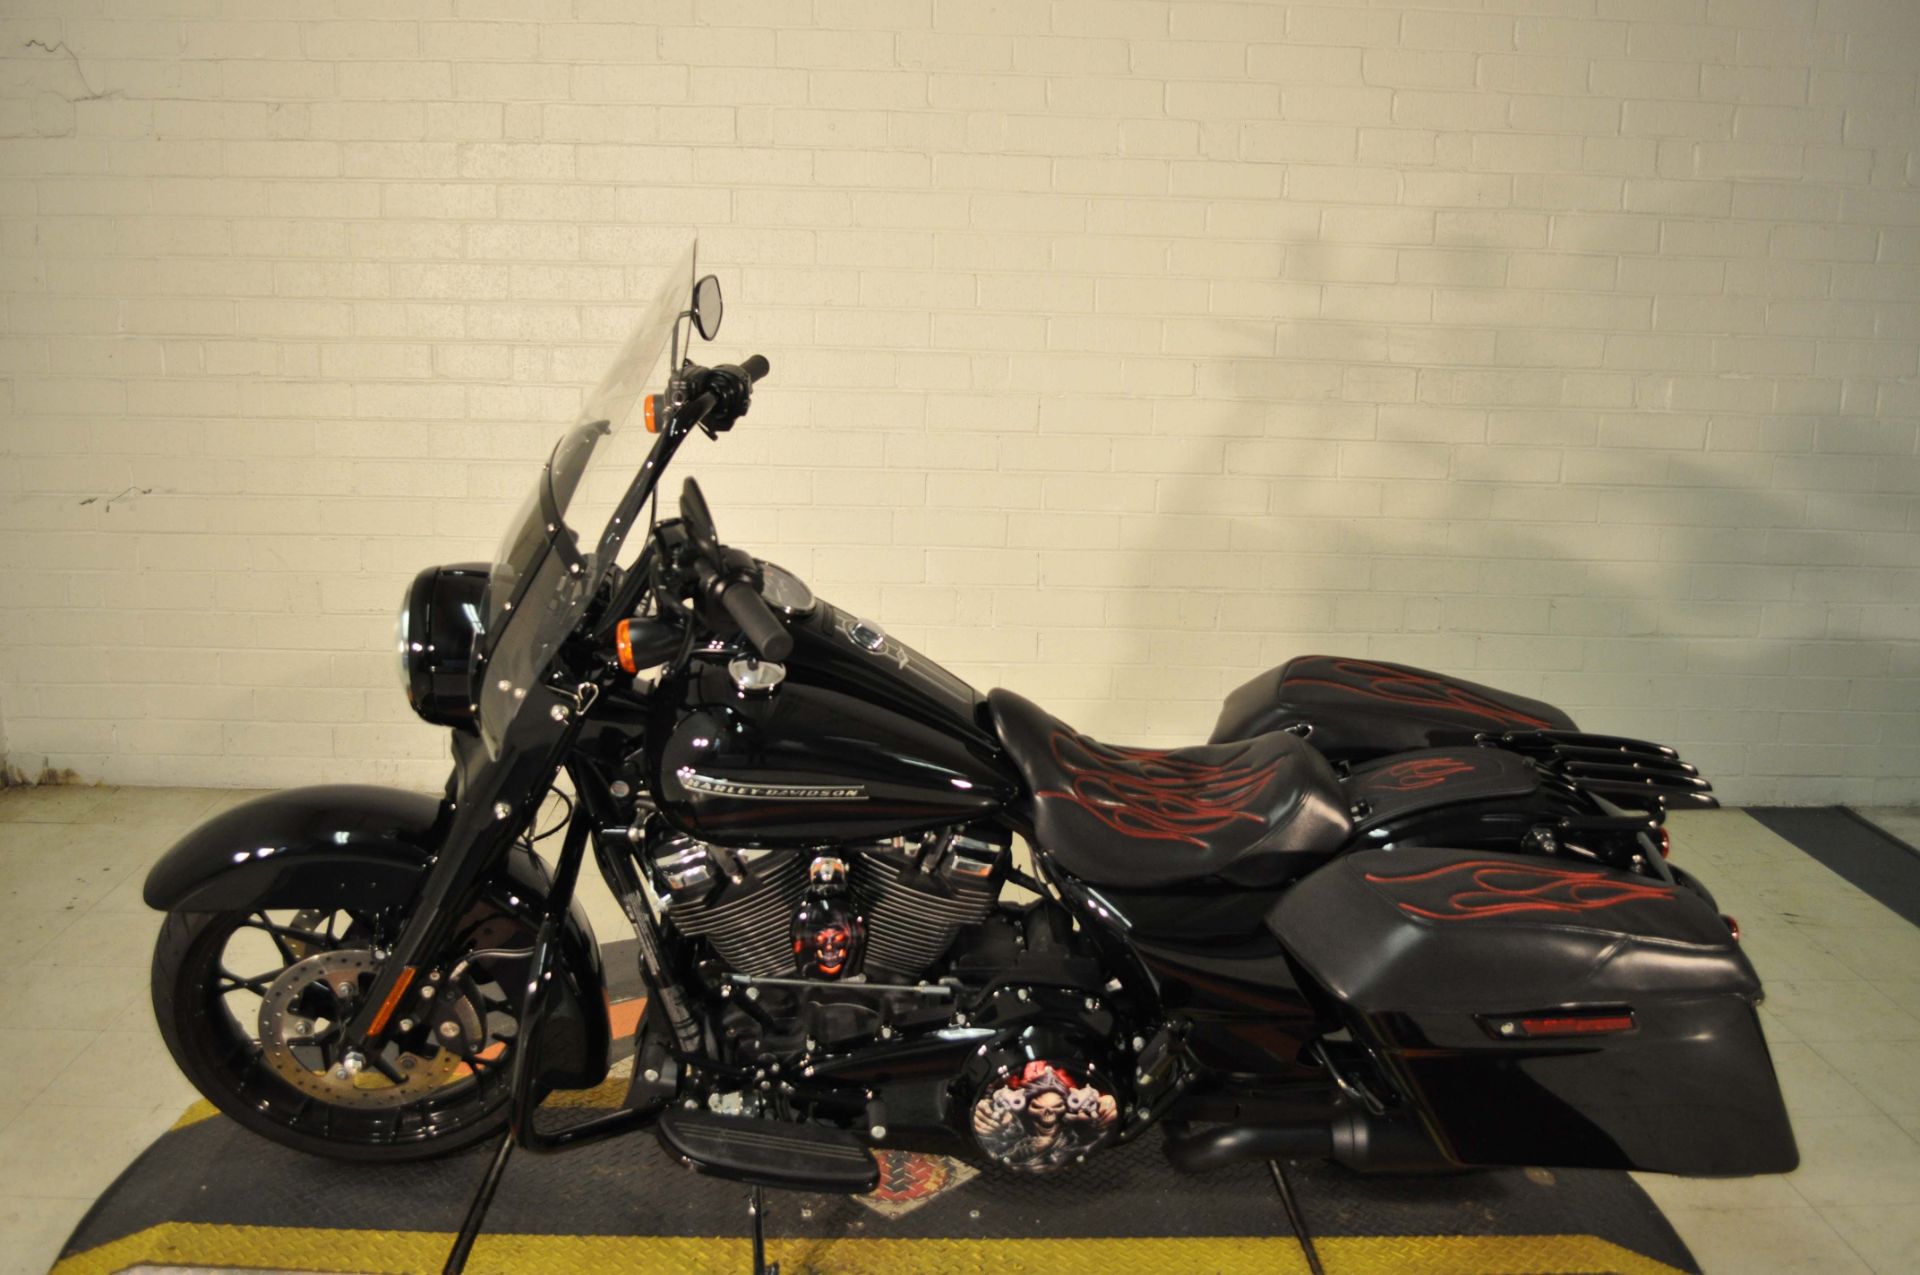 2020 Harley-Davidson Road King® Special in Winston Salem, North Carolina - Photo 5